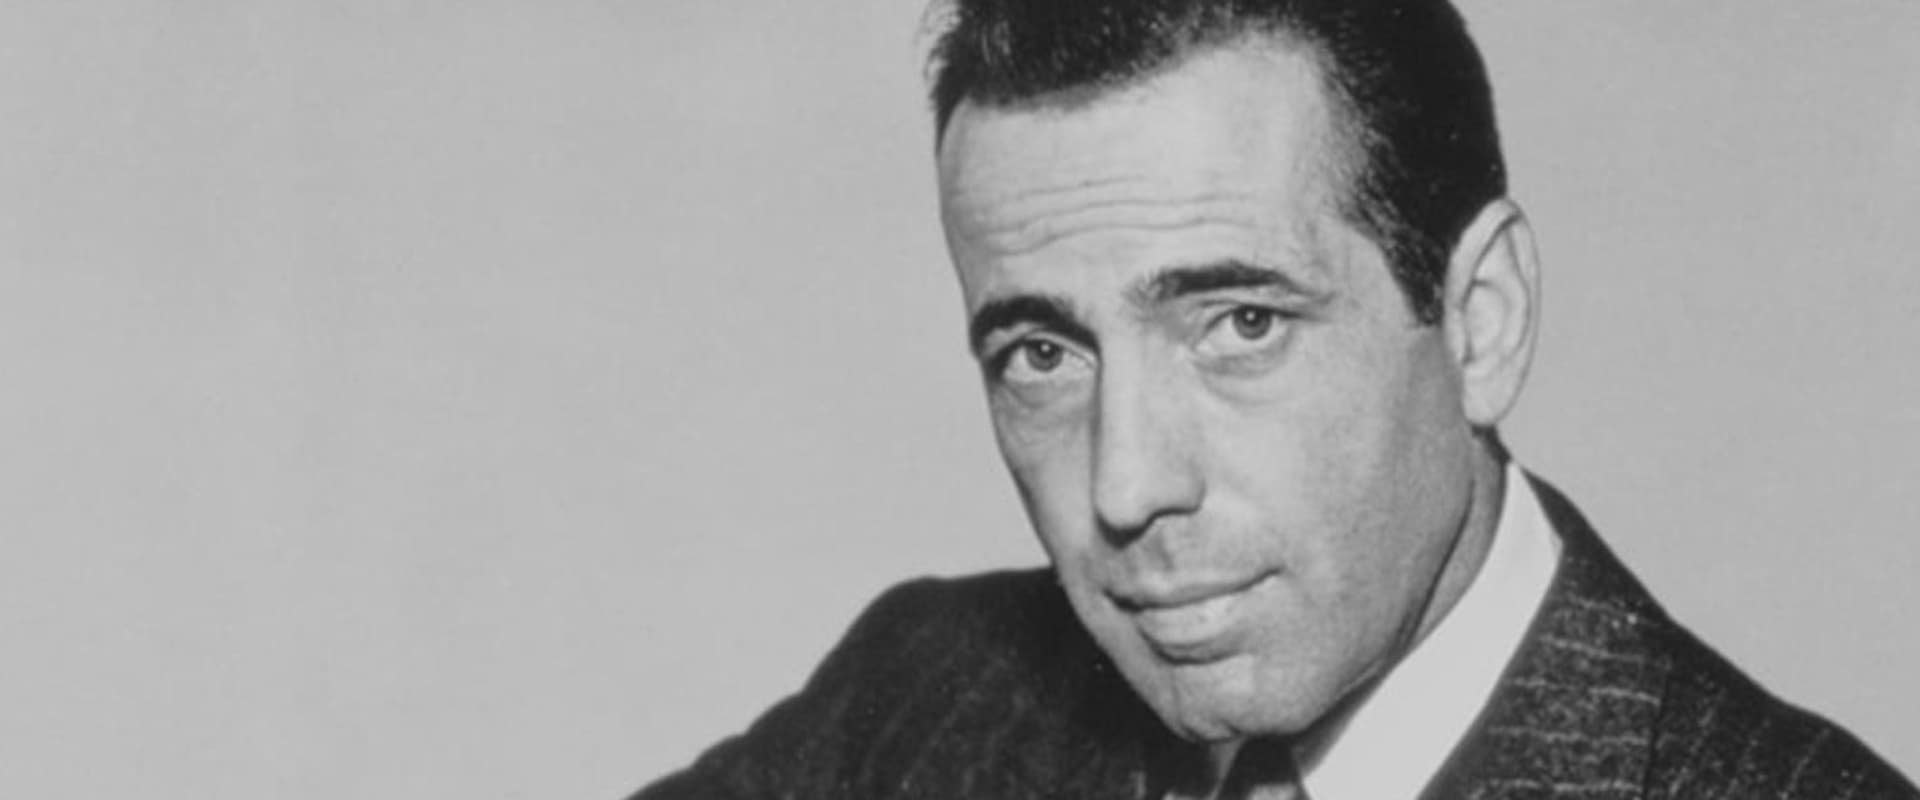 Bogart: The Untold Story